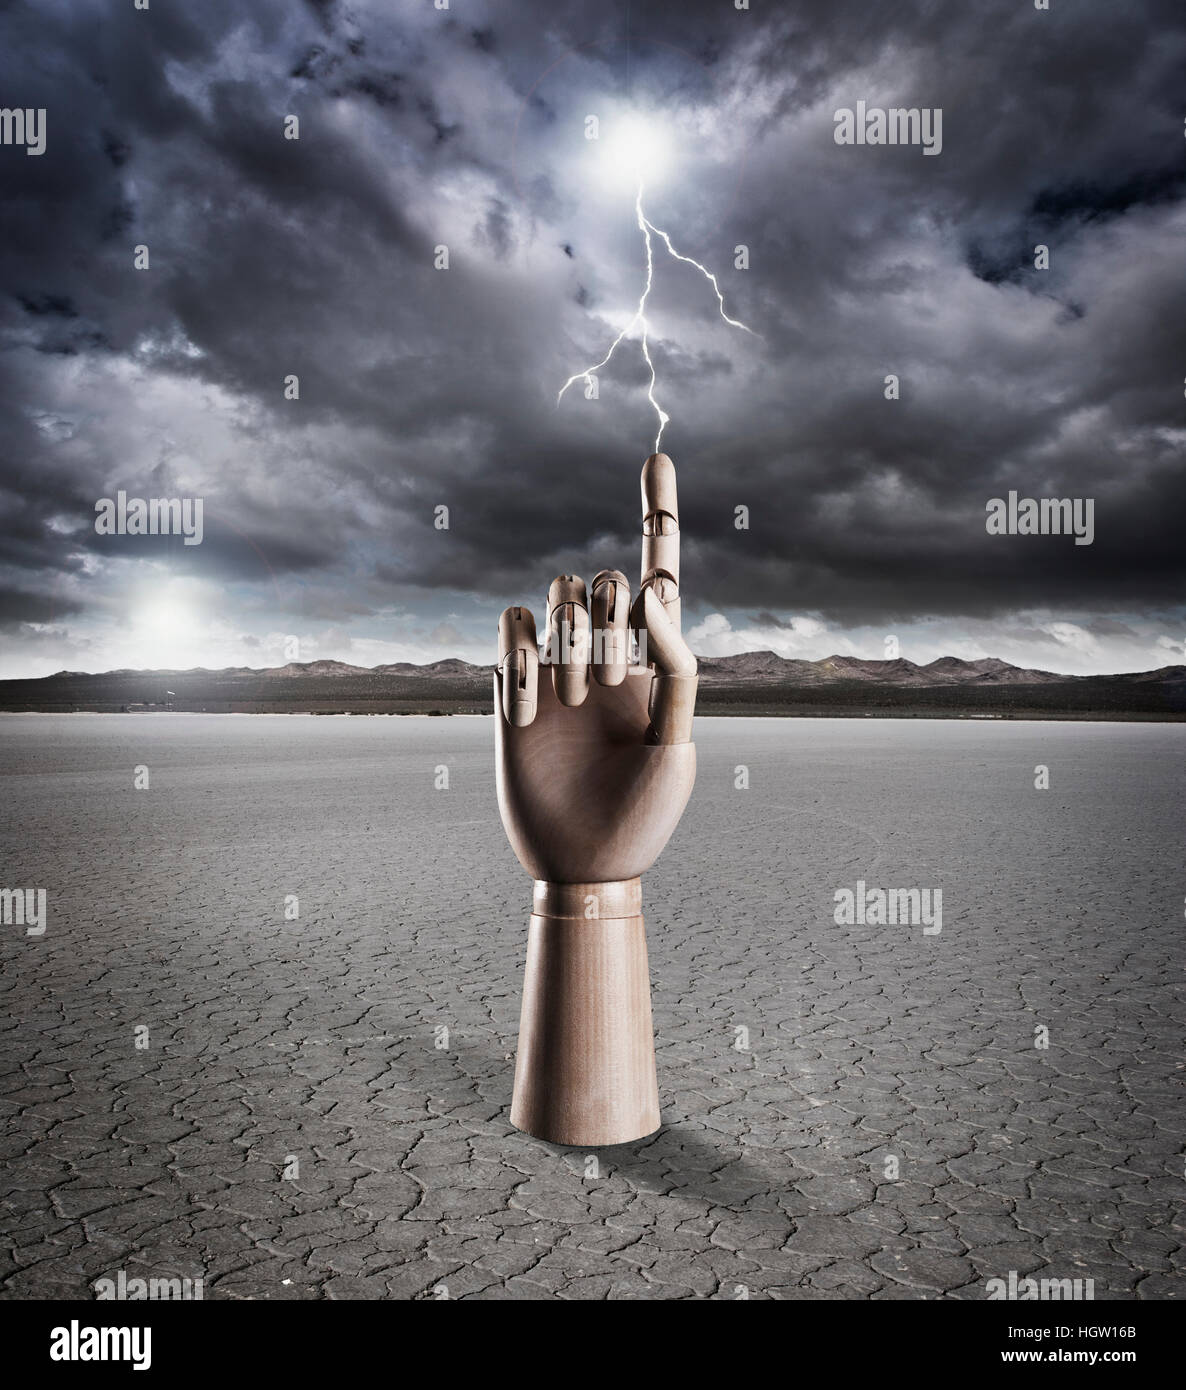 Manikin Hand Pointing With Lightning Stock Photo